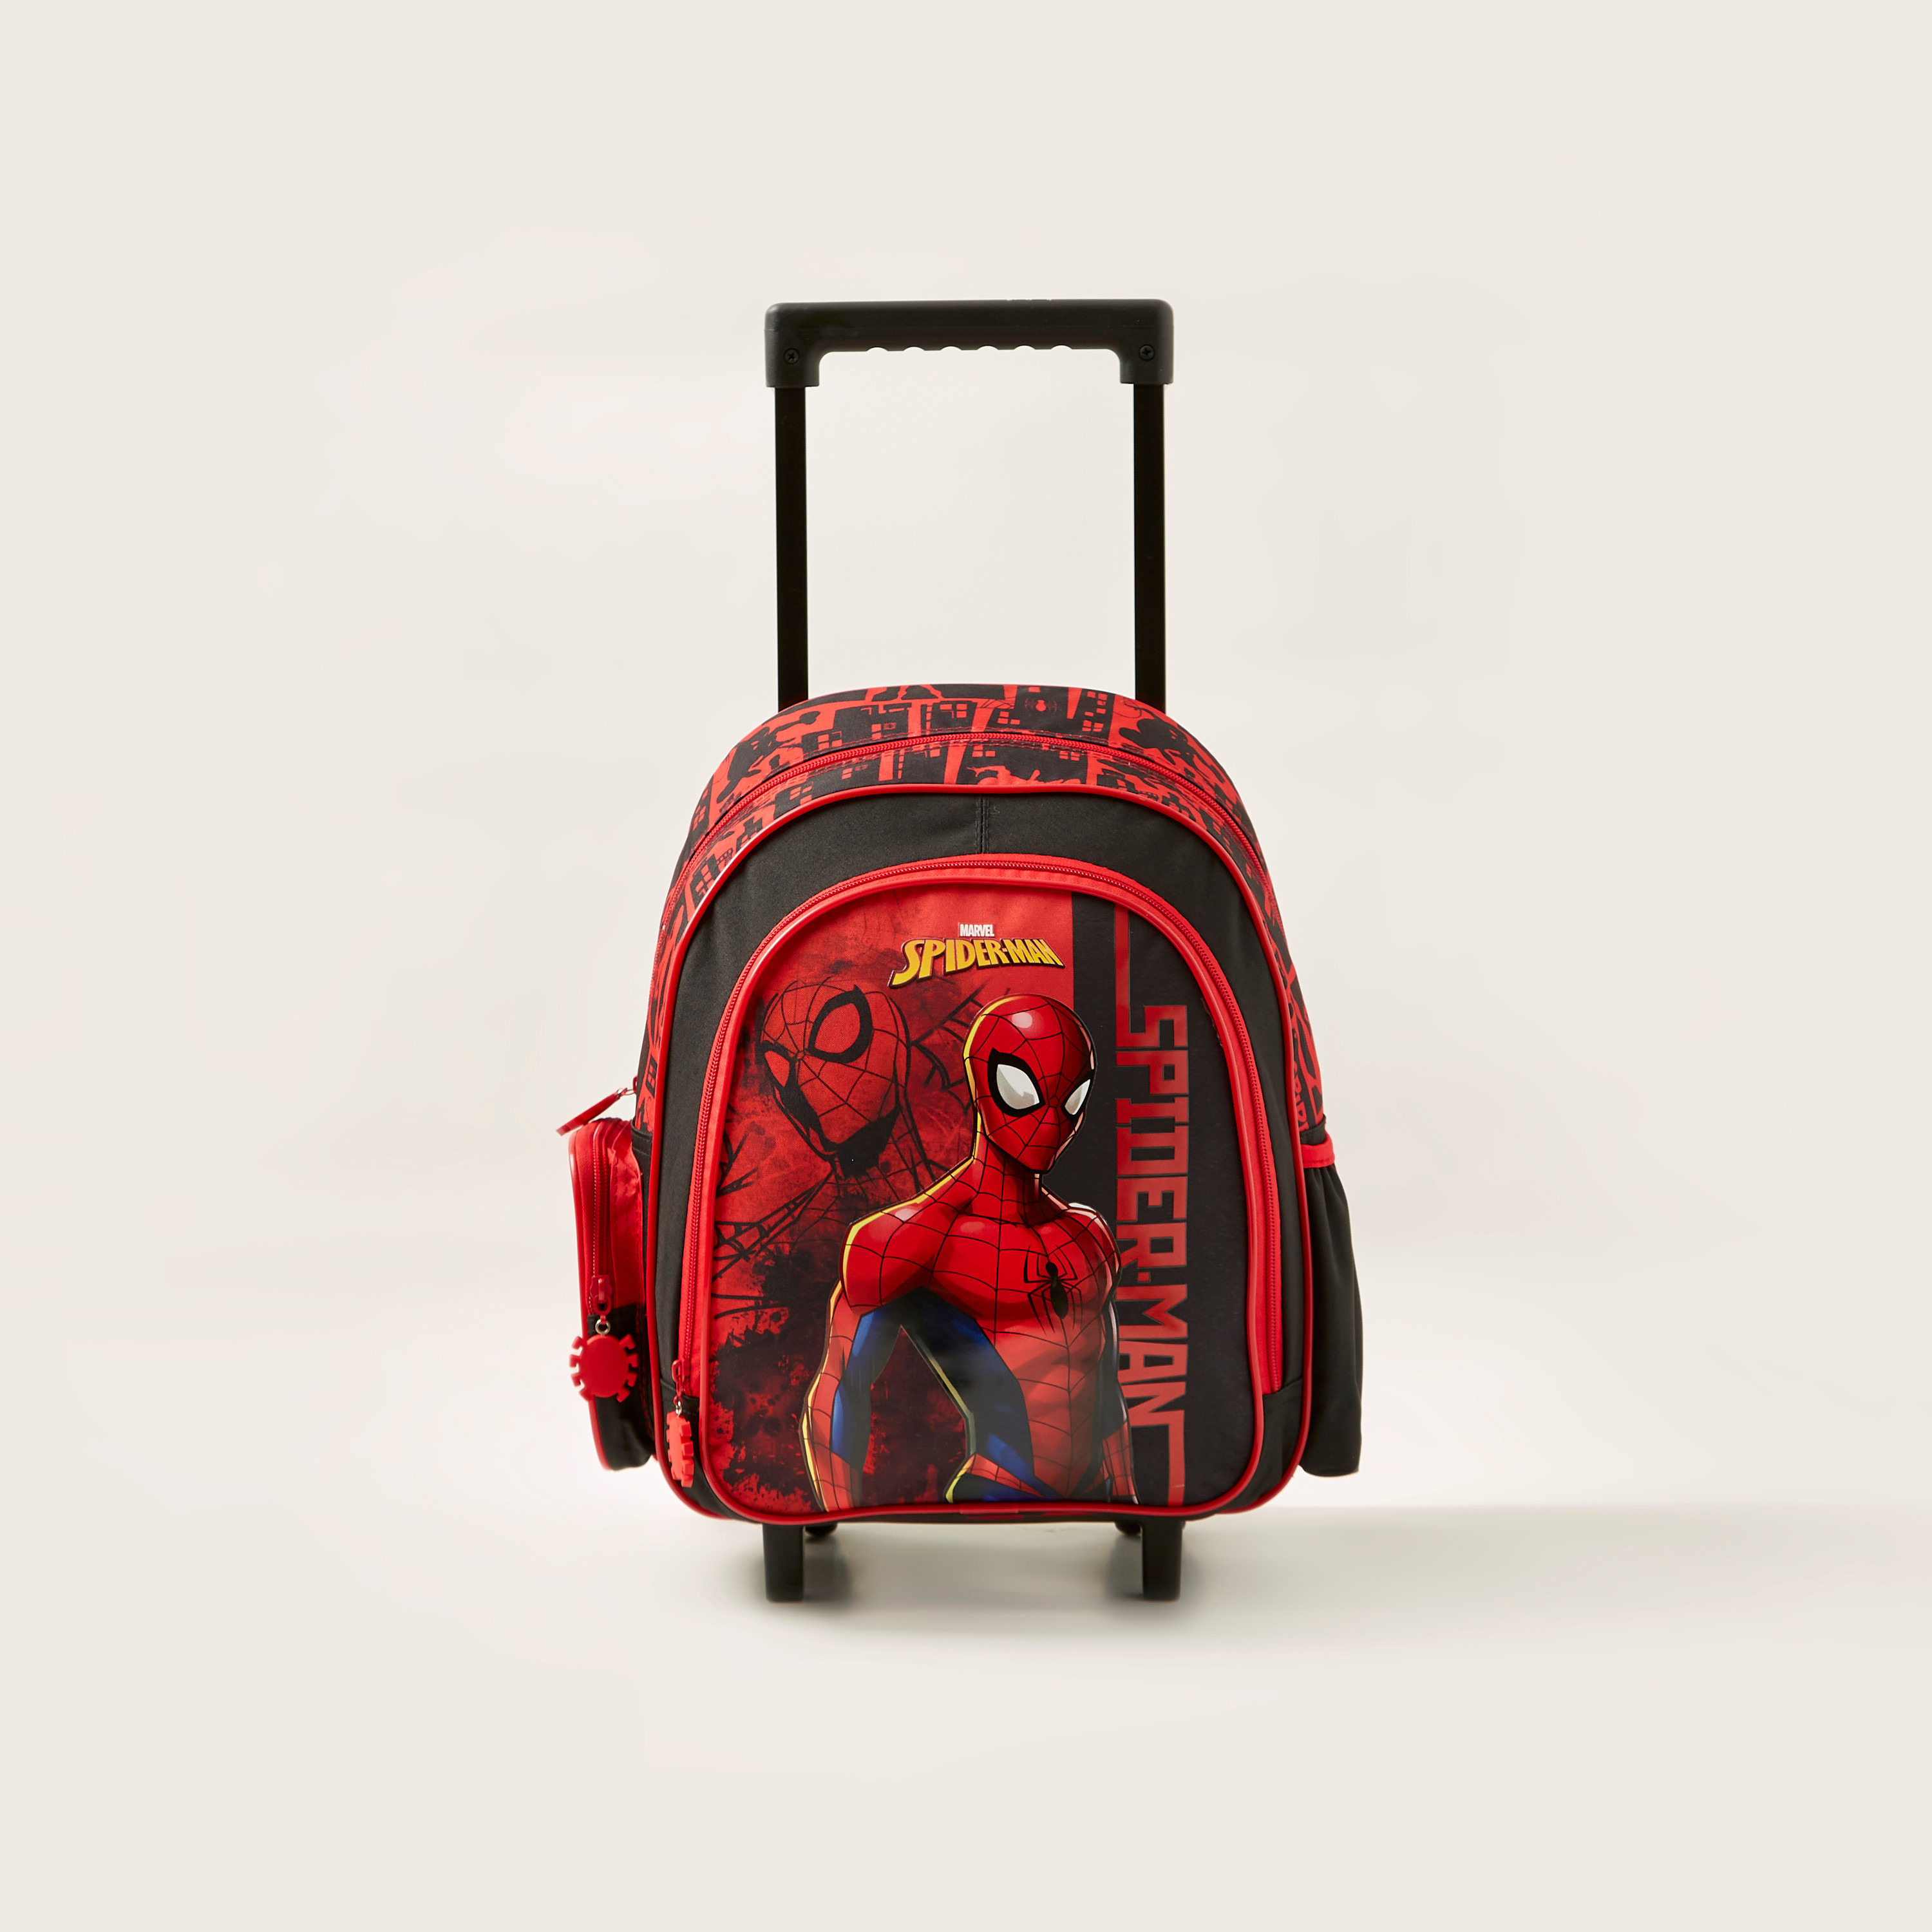 Spider-Man Kids Trolley Travel luggage with 2 Wheels | eBay